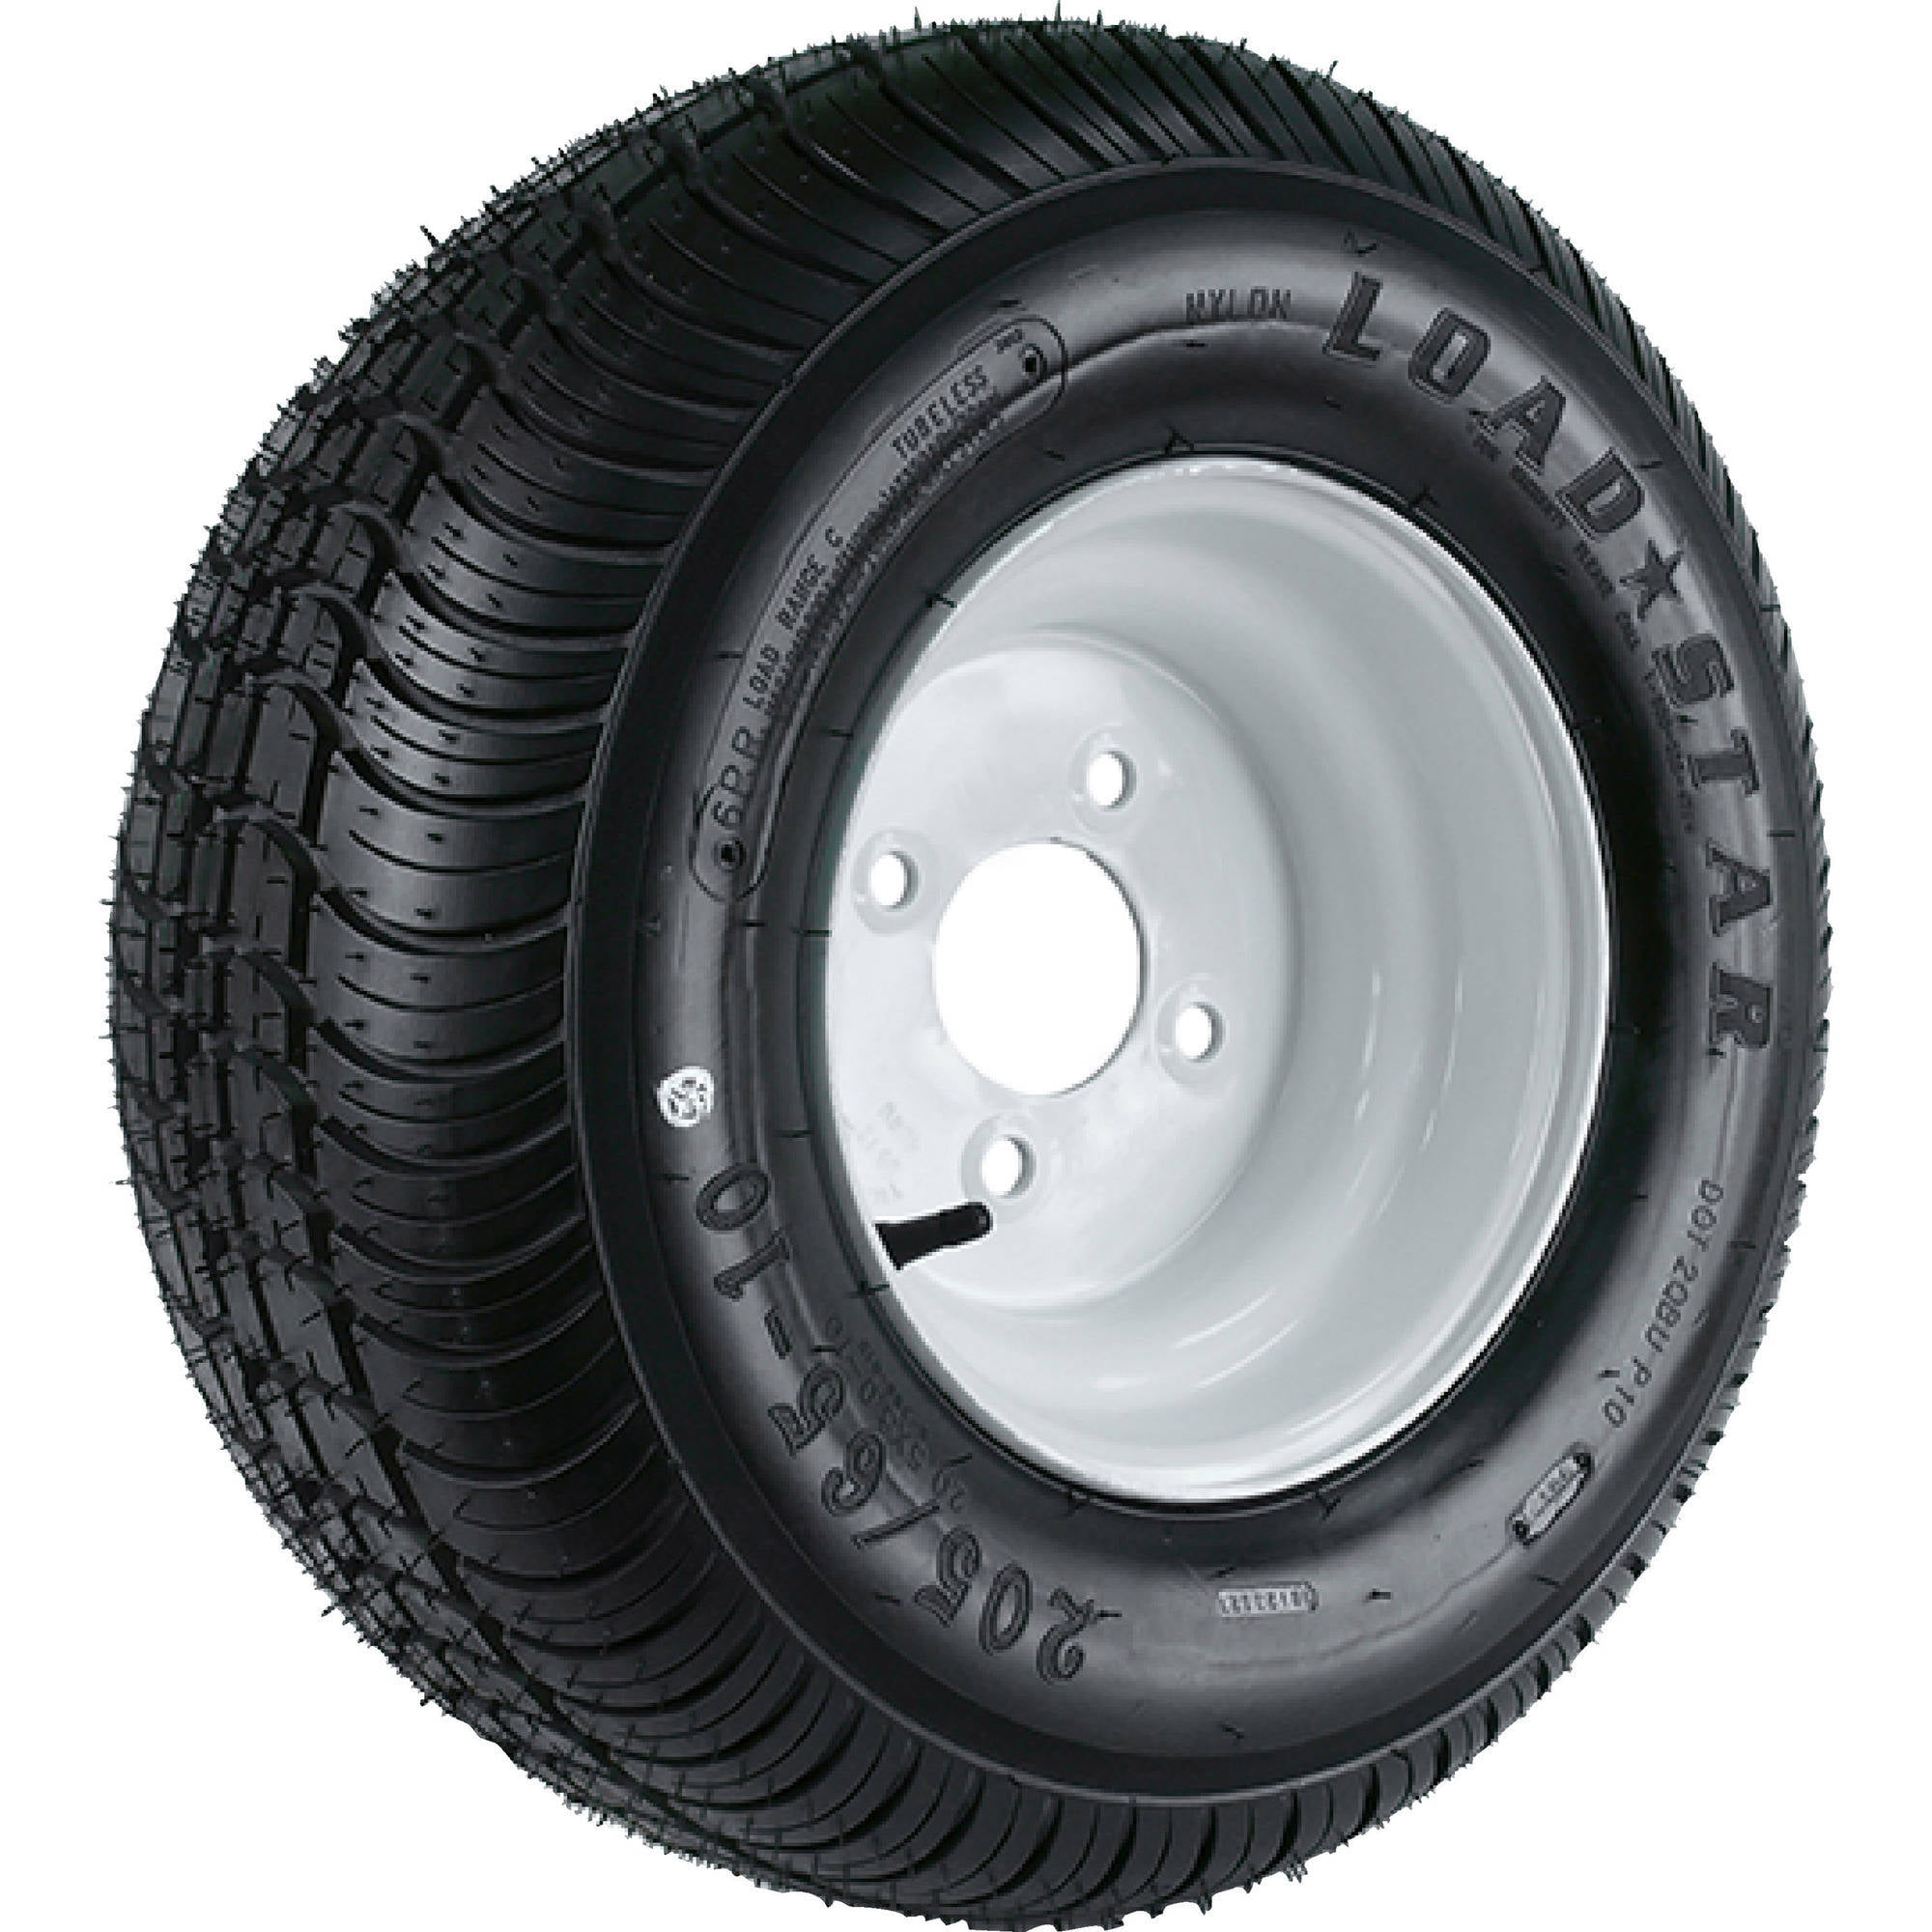 Loadstar Wide Profile Tire and Wheel (Rim) Assembly K399, 215/608 Bias